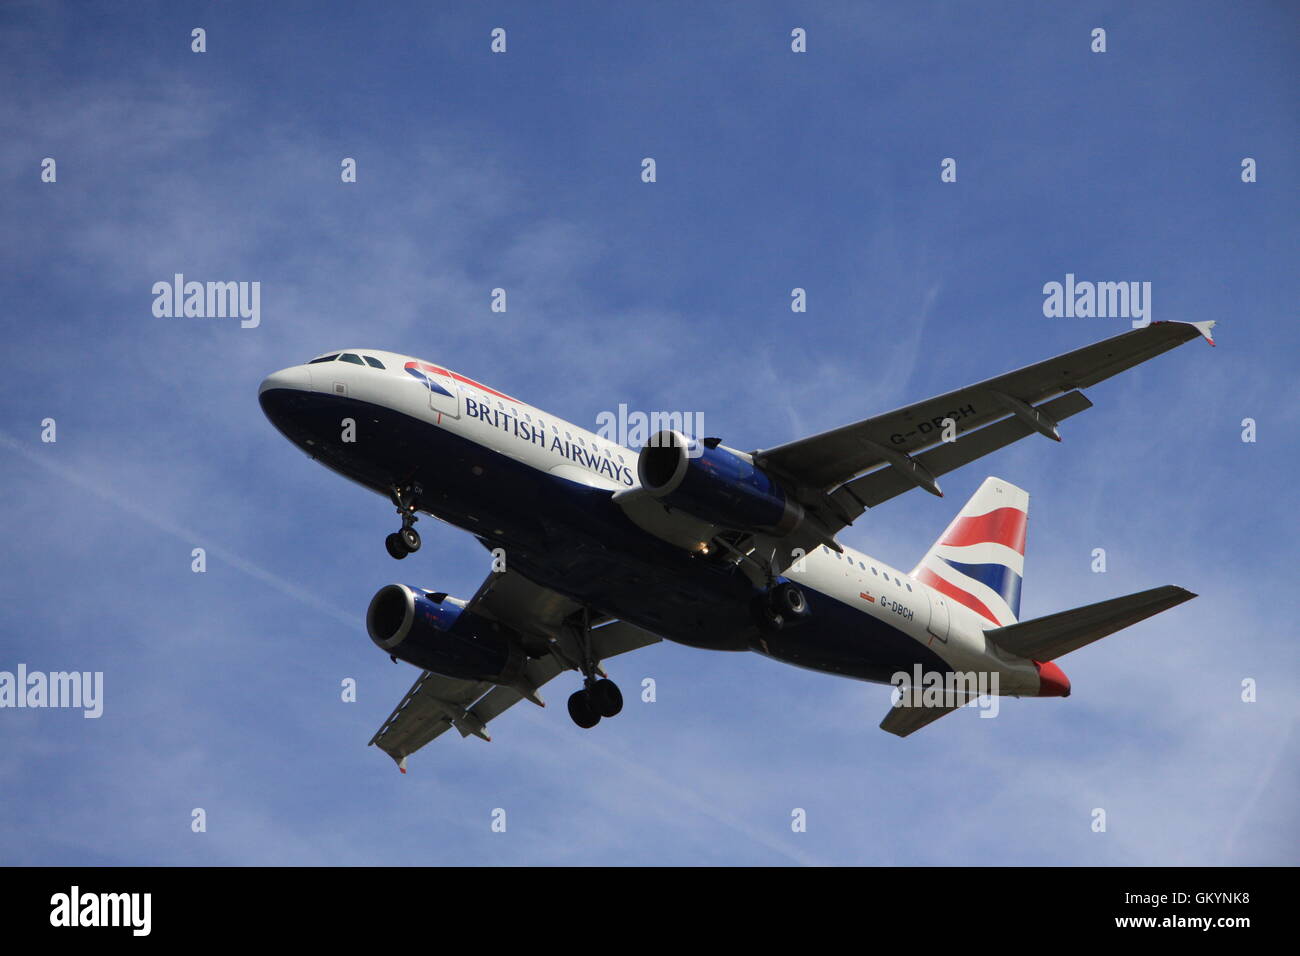 British Airways jet aircraft landing at London Heathrow Airport Stock Photo